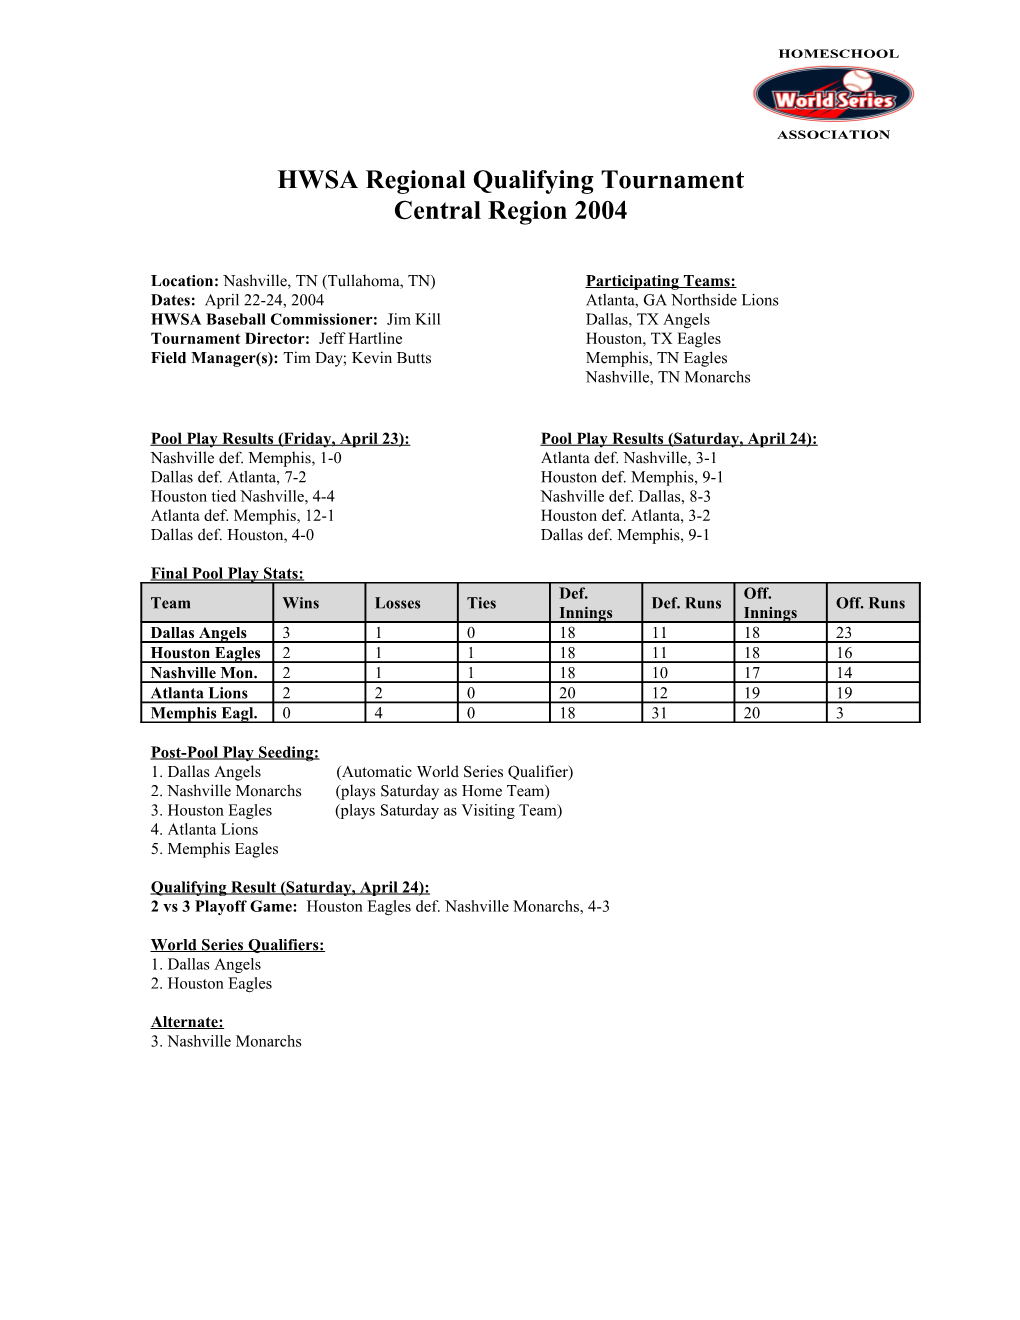 HWSA Tournament Report